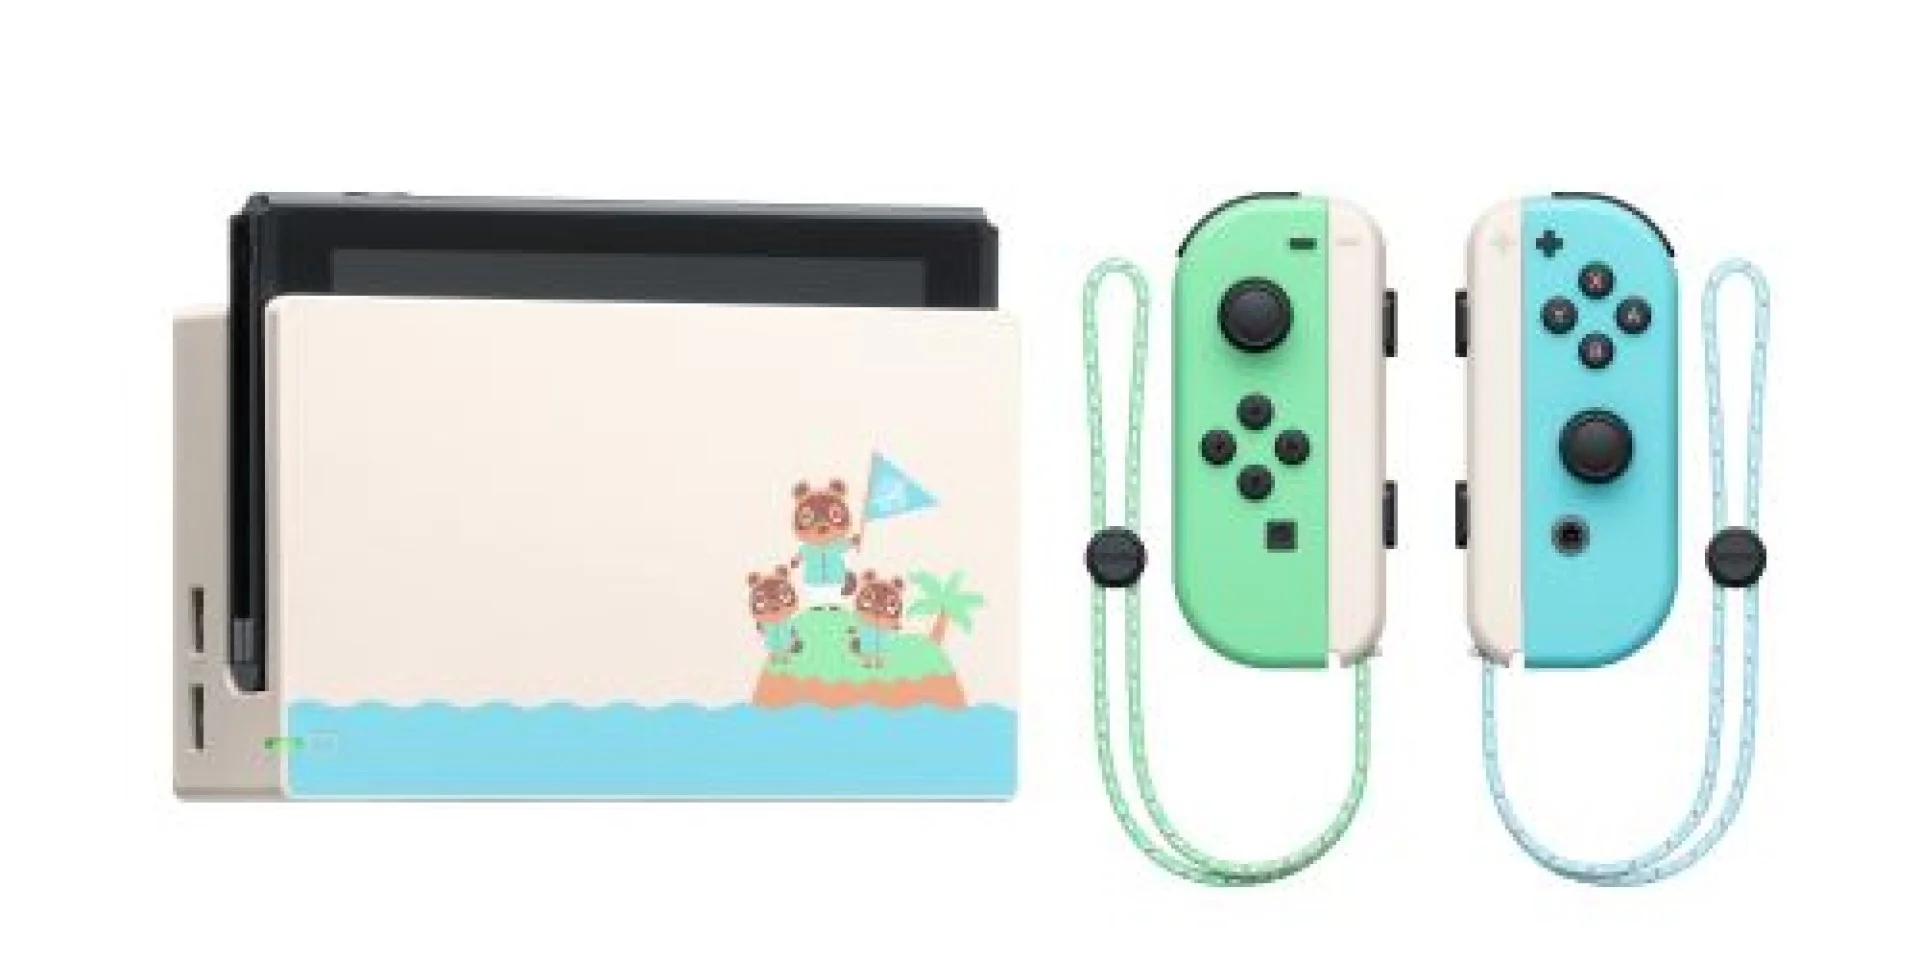  Nintendo Switch Animal Crossing New Horizons Console [UK]